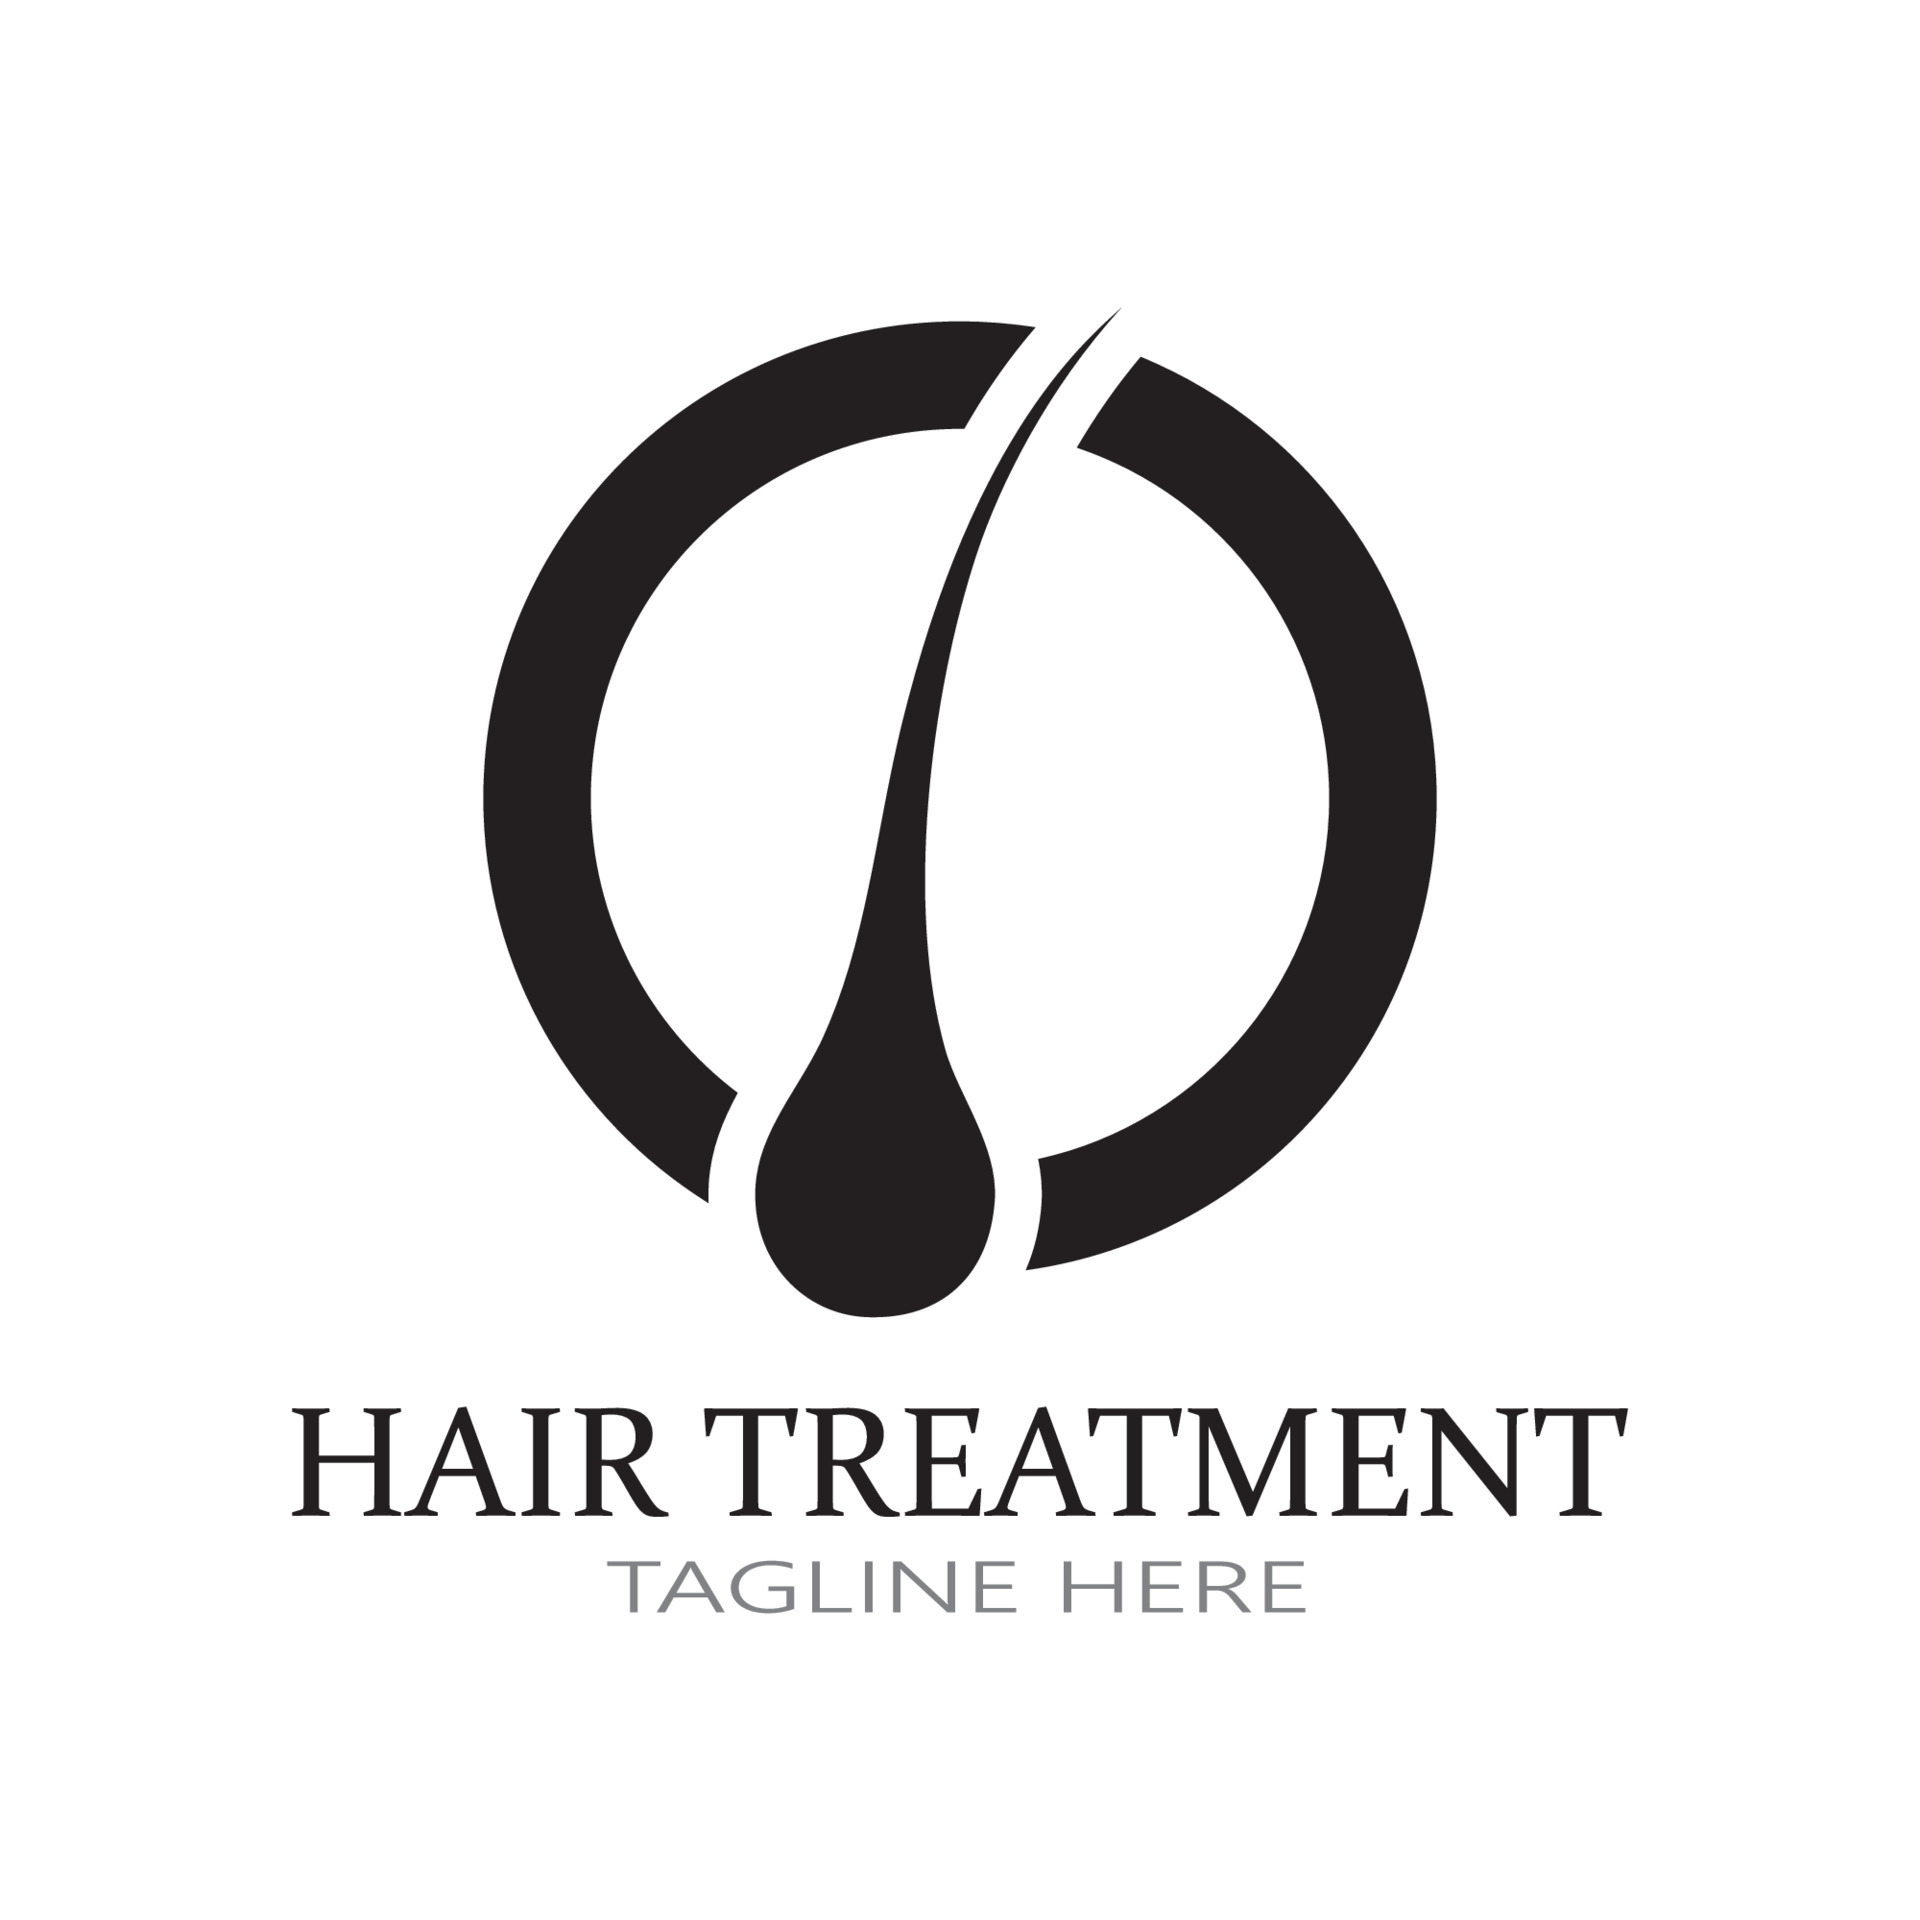 Hair treatment logo removal logo vector image design illustration ...